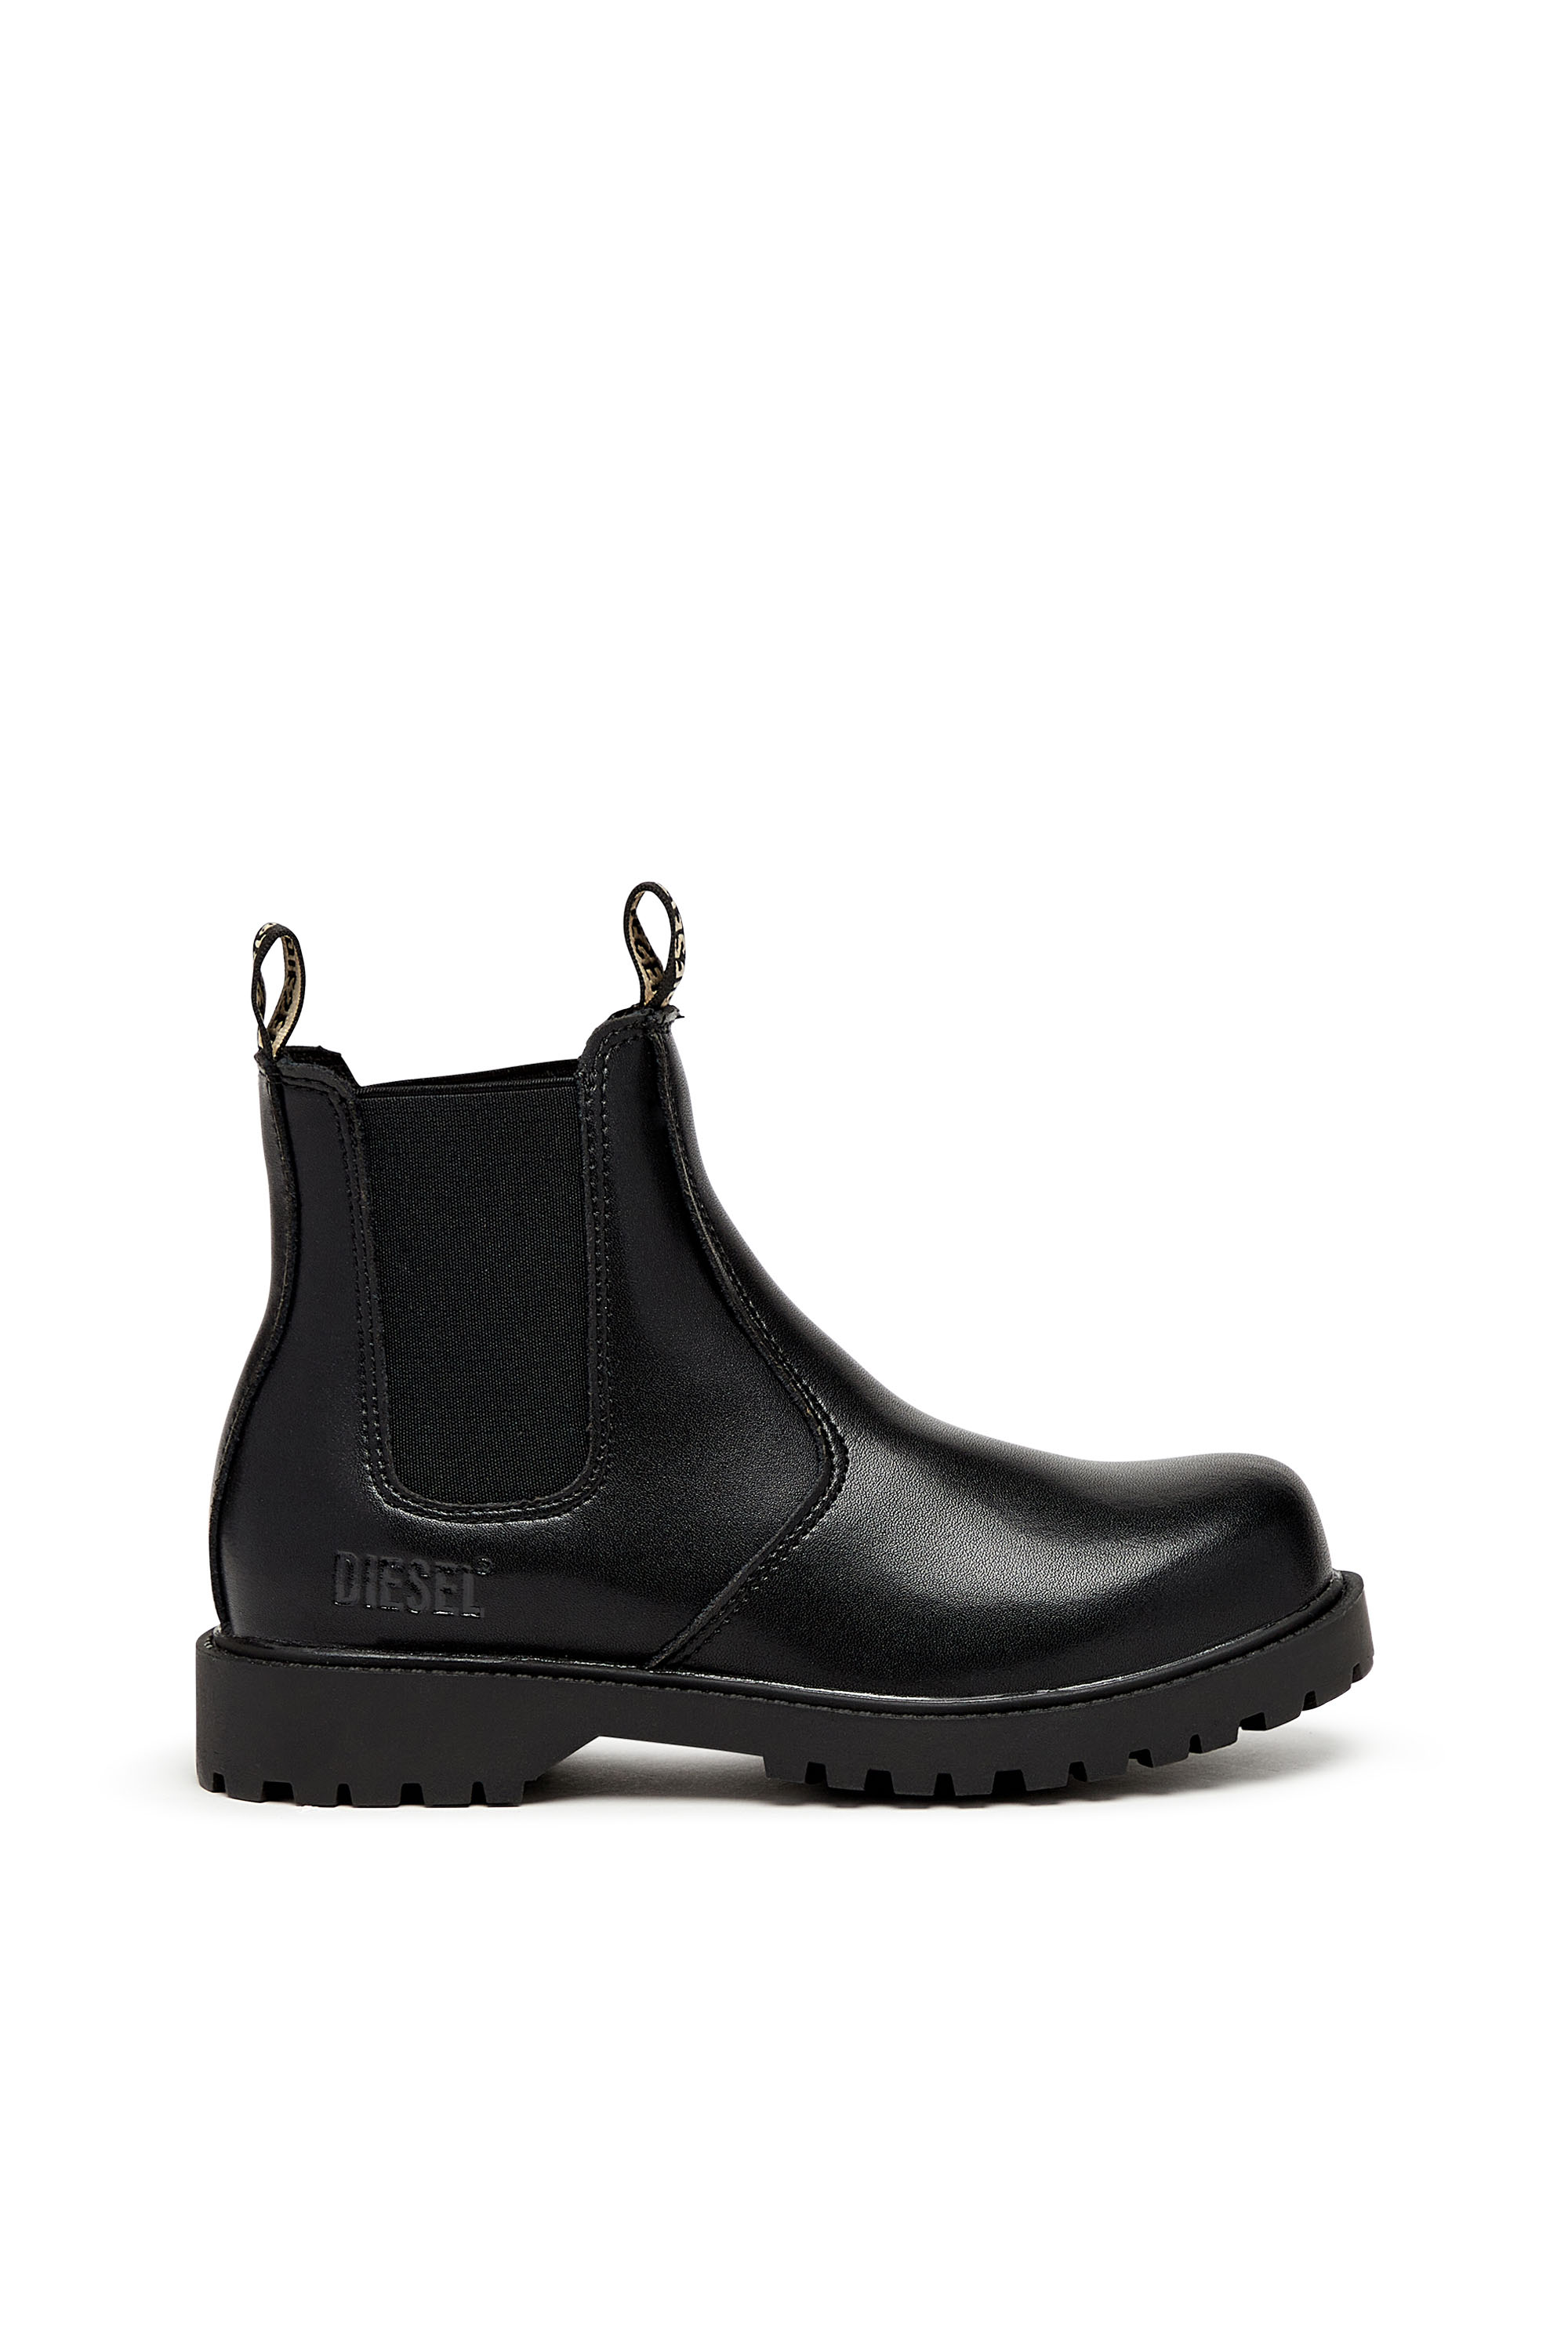 Diesel - Chelsea boots in nubuck leather - Footwear - Unisex - Black